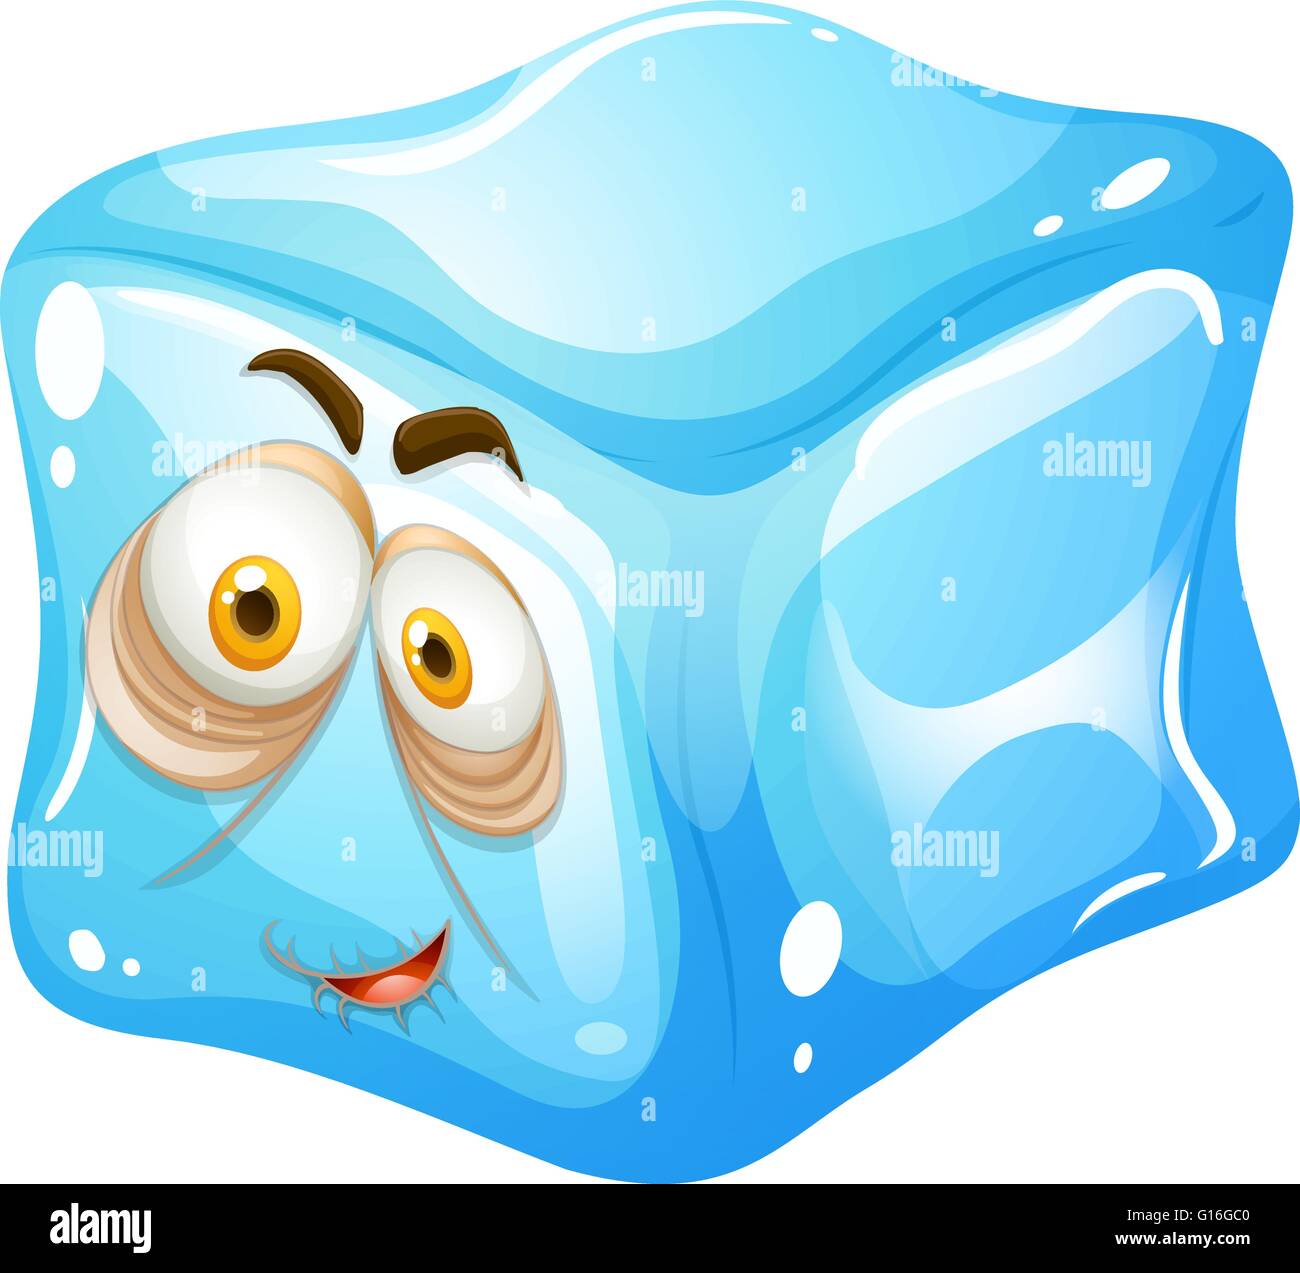 Ice cube with sleepy face illustration Stock Vector